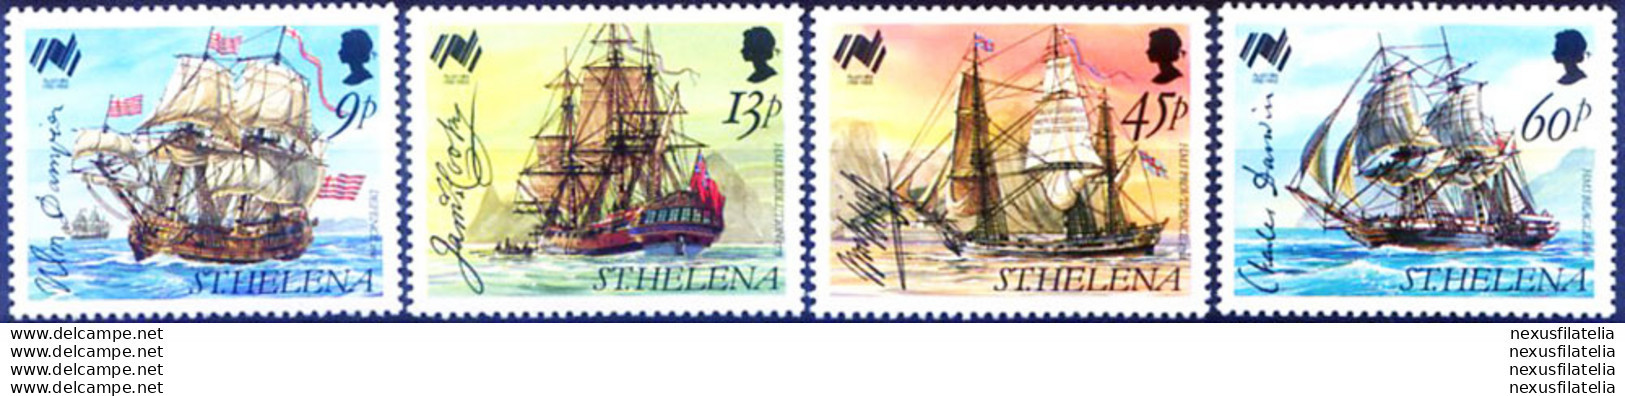 Velieri 1988. - Saint Helena Island